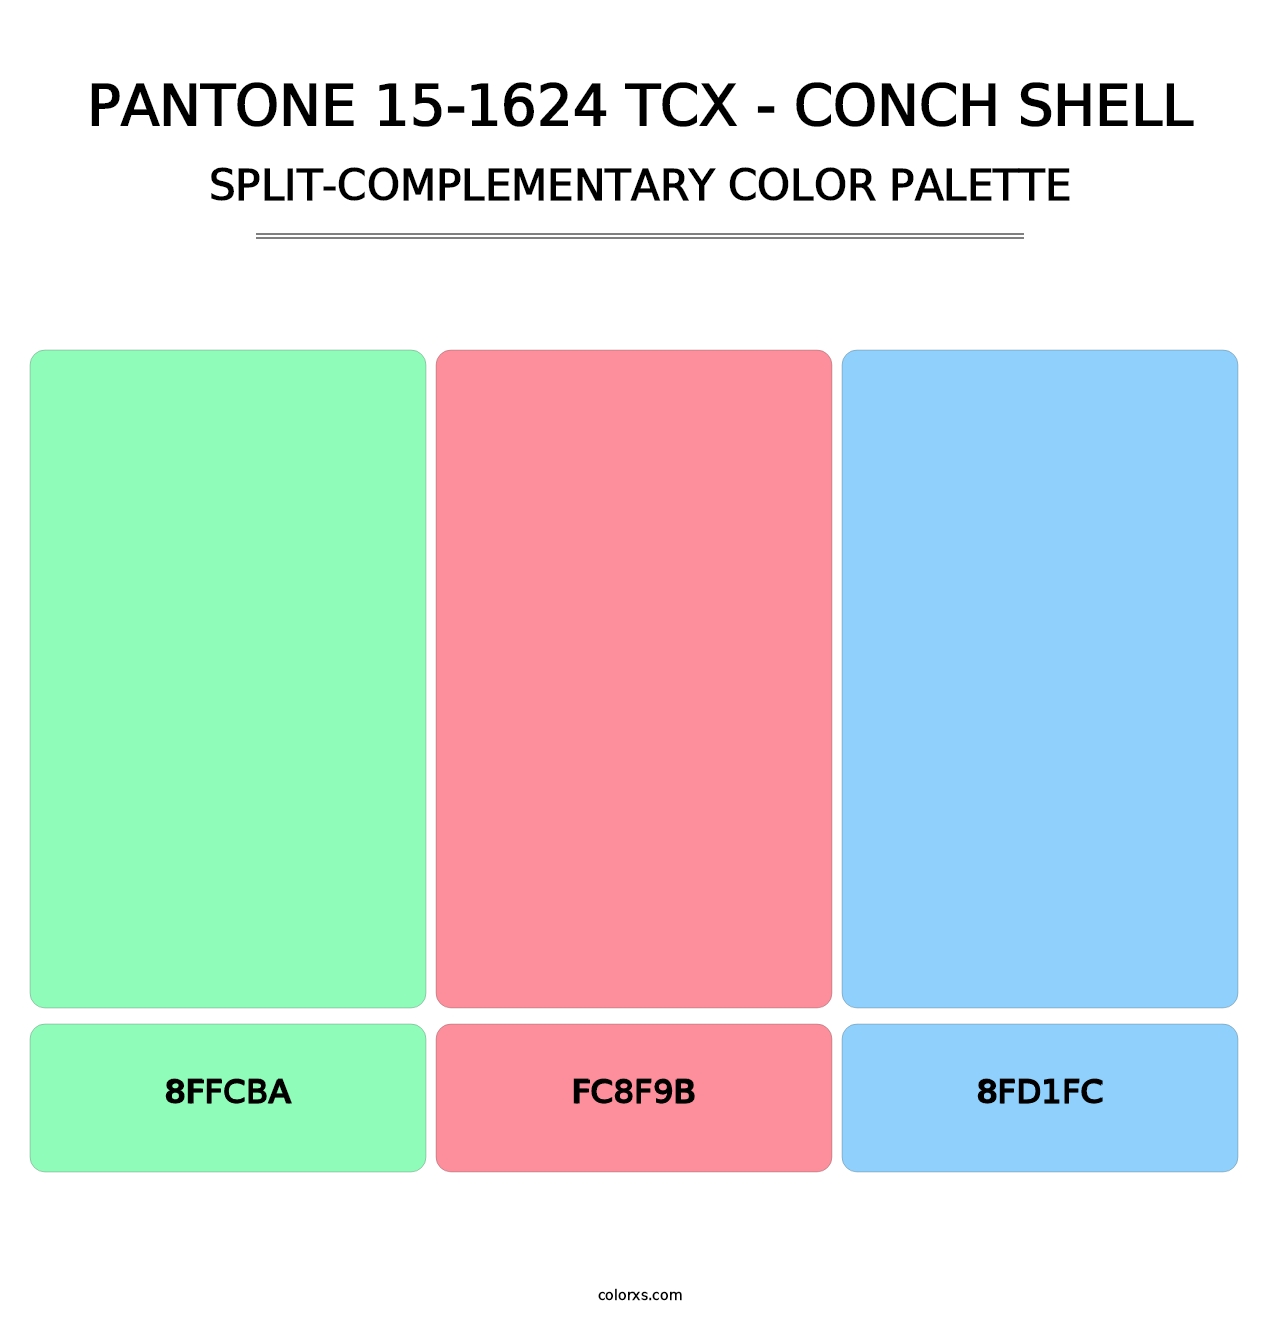 PANTONE 15-1624 TCX - Conch Shell - Split-Complementary Color Palette